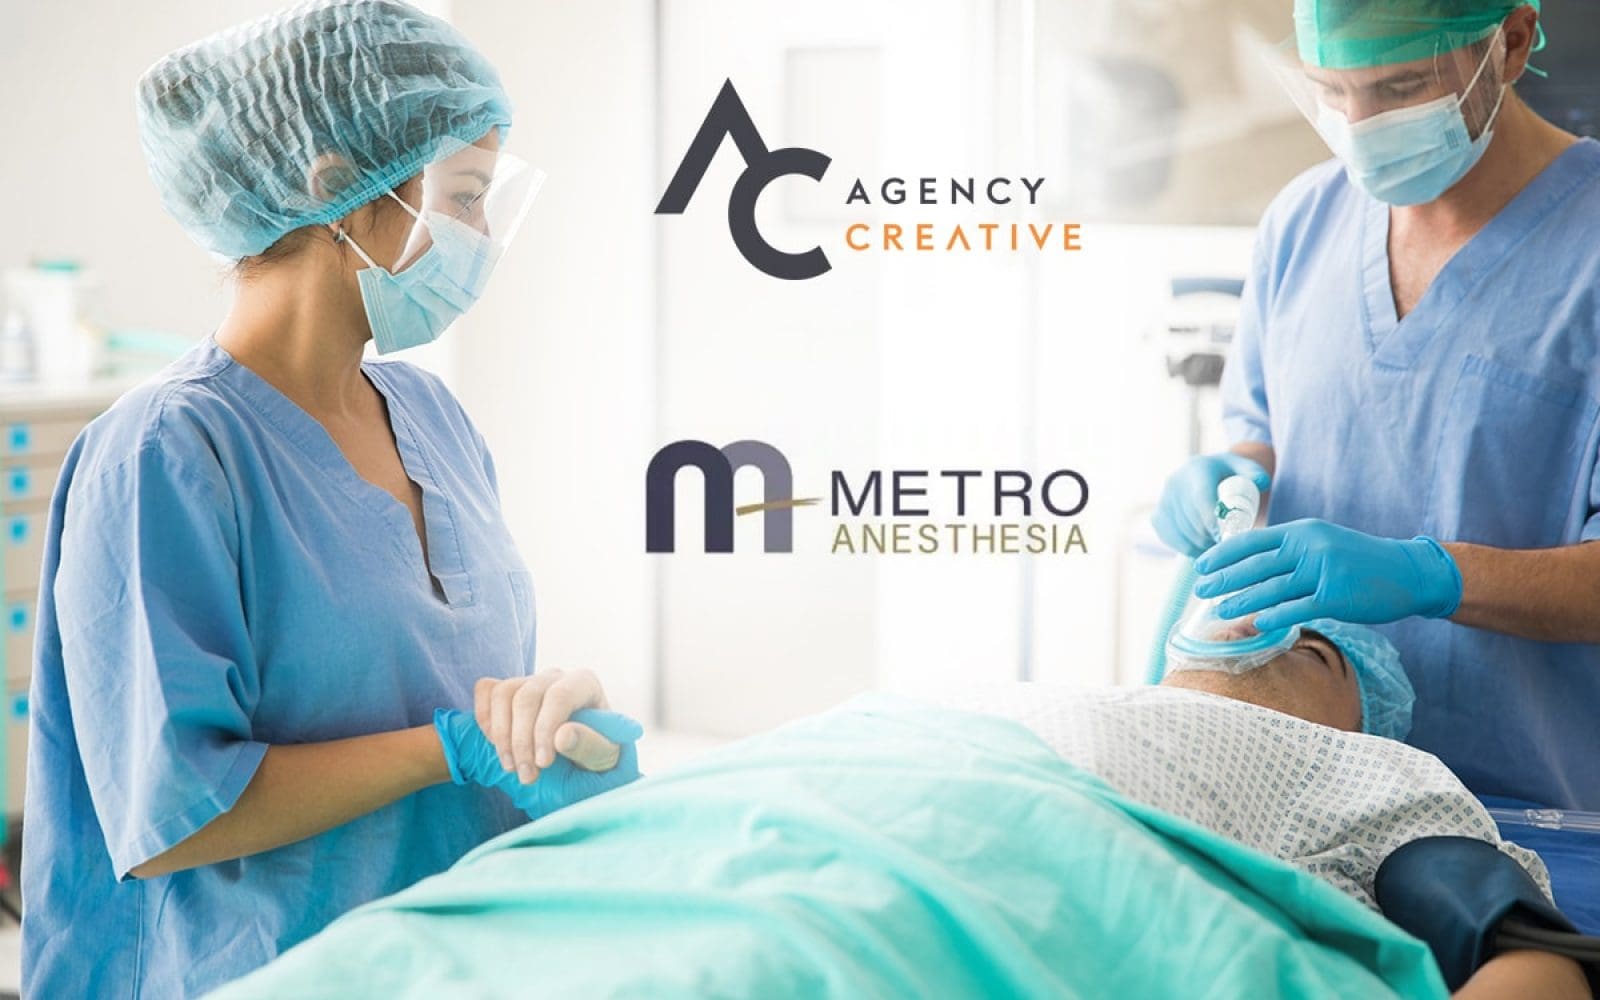 Medical Marketing - Award-Winning Dallas Marketing and Advertising Agency | Agency Creative based in Dallas TX